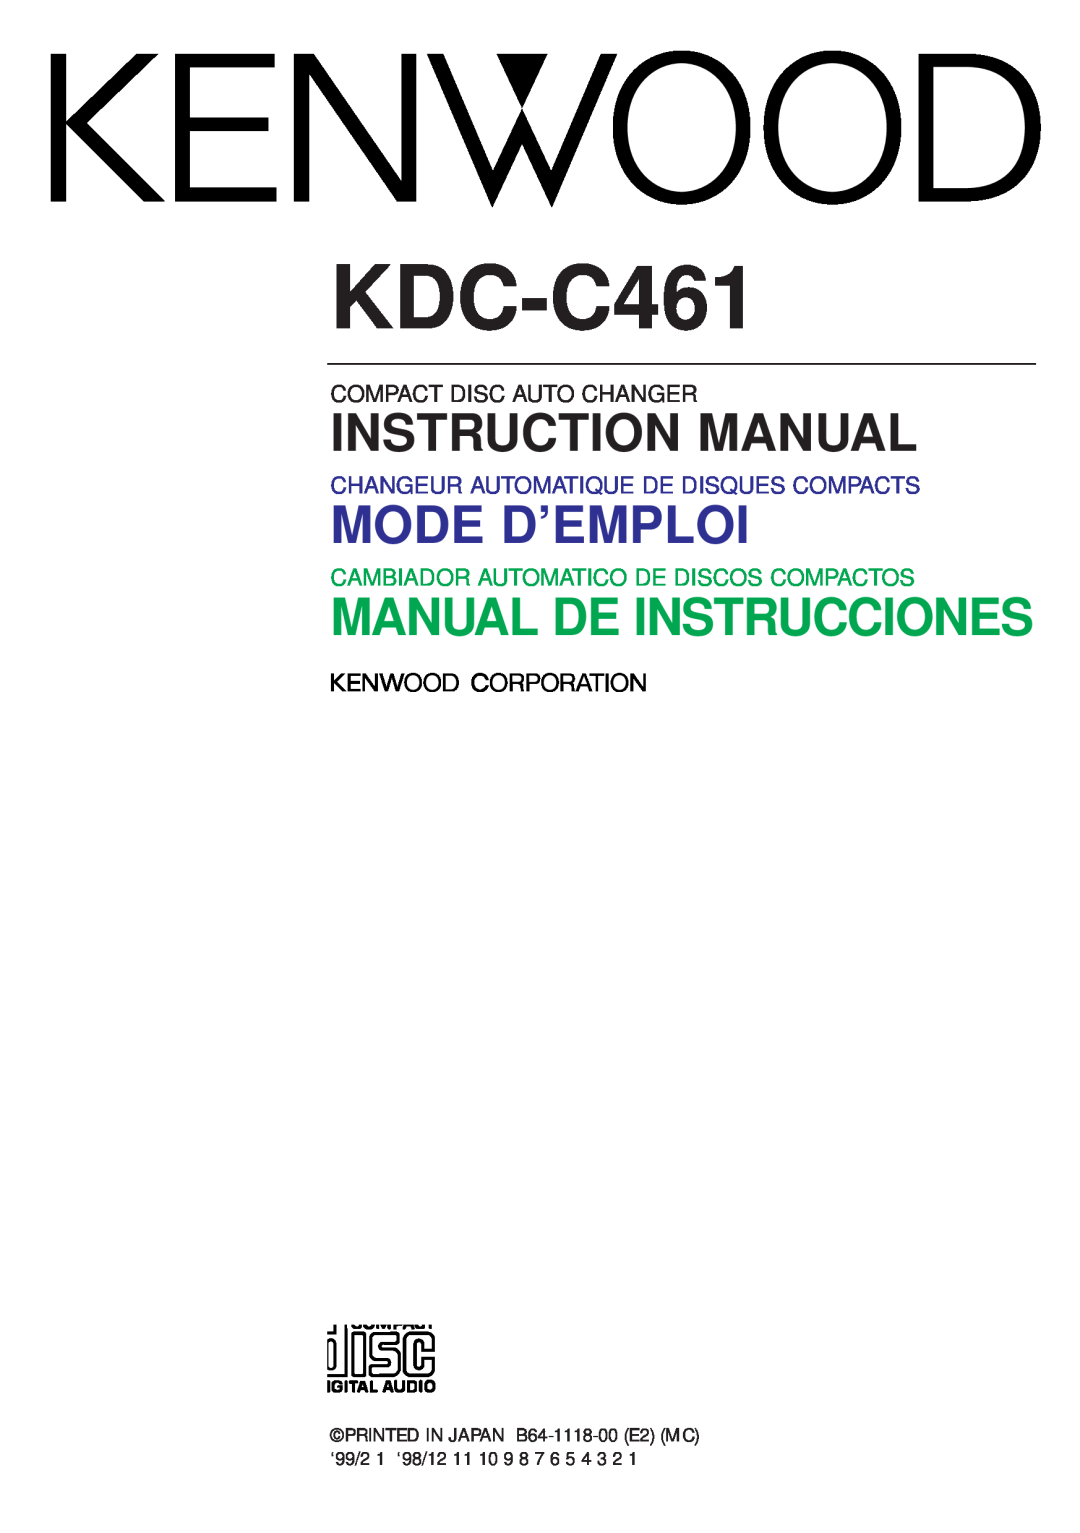 Kenwood KDC-C461 instruction manual Mode D’Emploi, Manual De Instrucciones, Compact Disc Auto Changer 